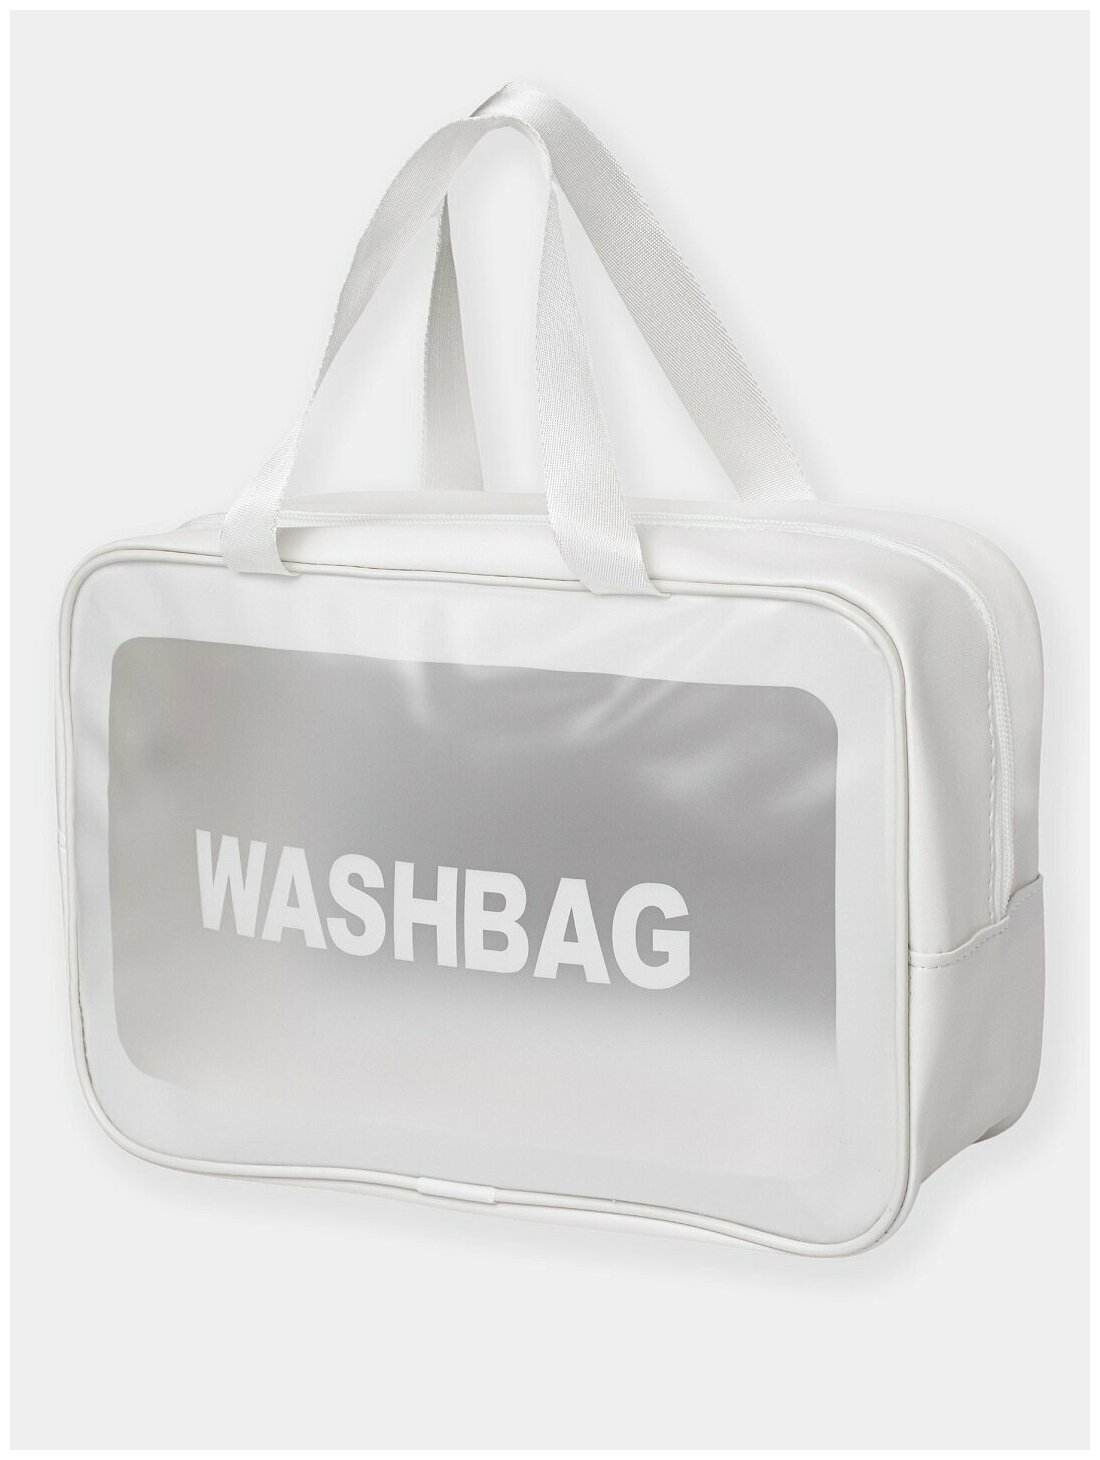 Косметичка водонепроницаемая Washbag сумка с ручкой органайзер косметичка для бассейна душа роддома